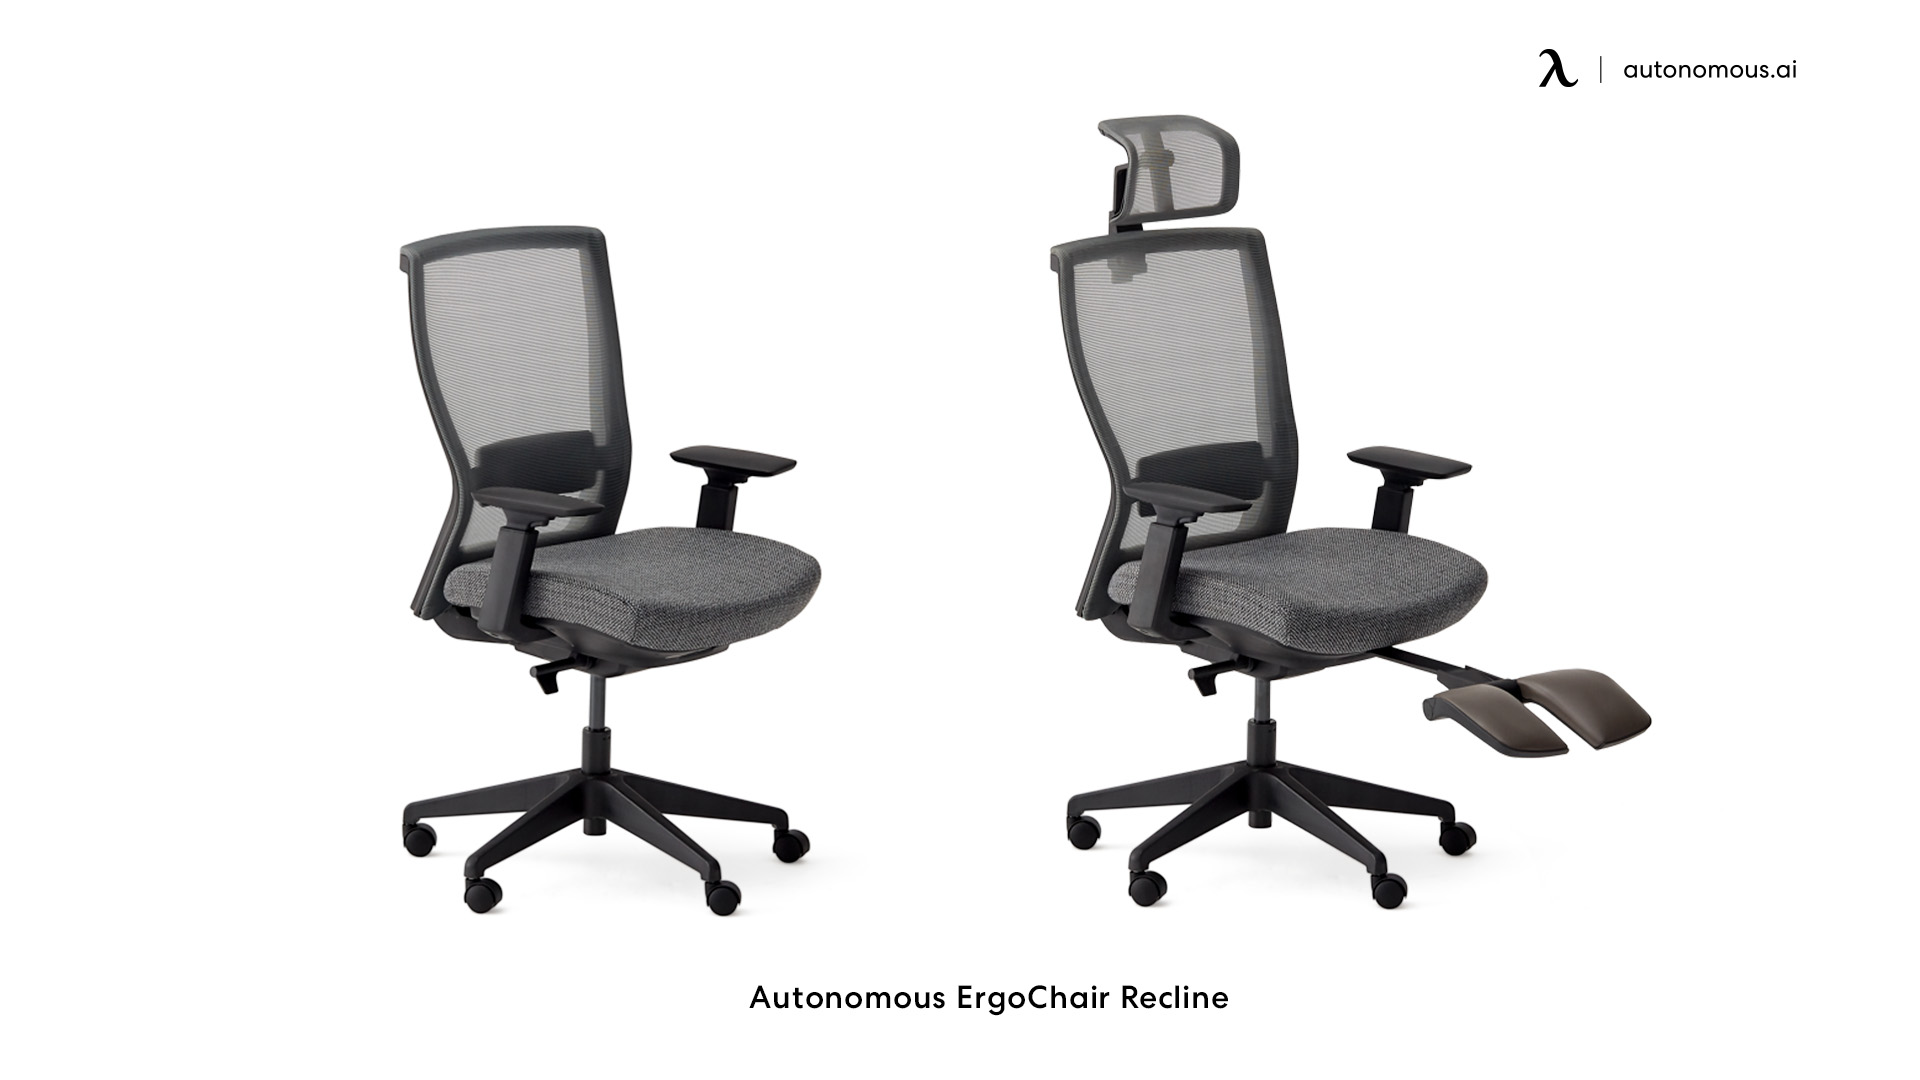 ErgoChair Recline High back executive chair with headrest